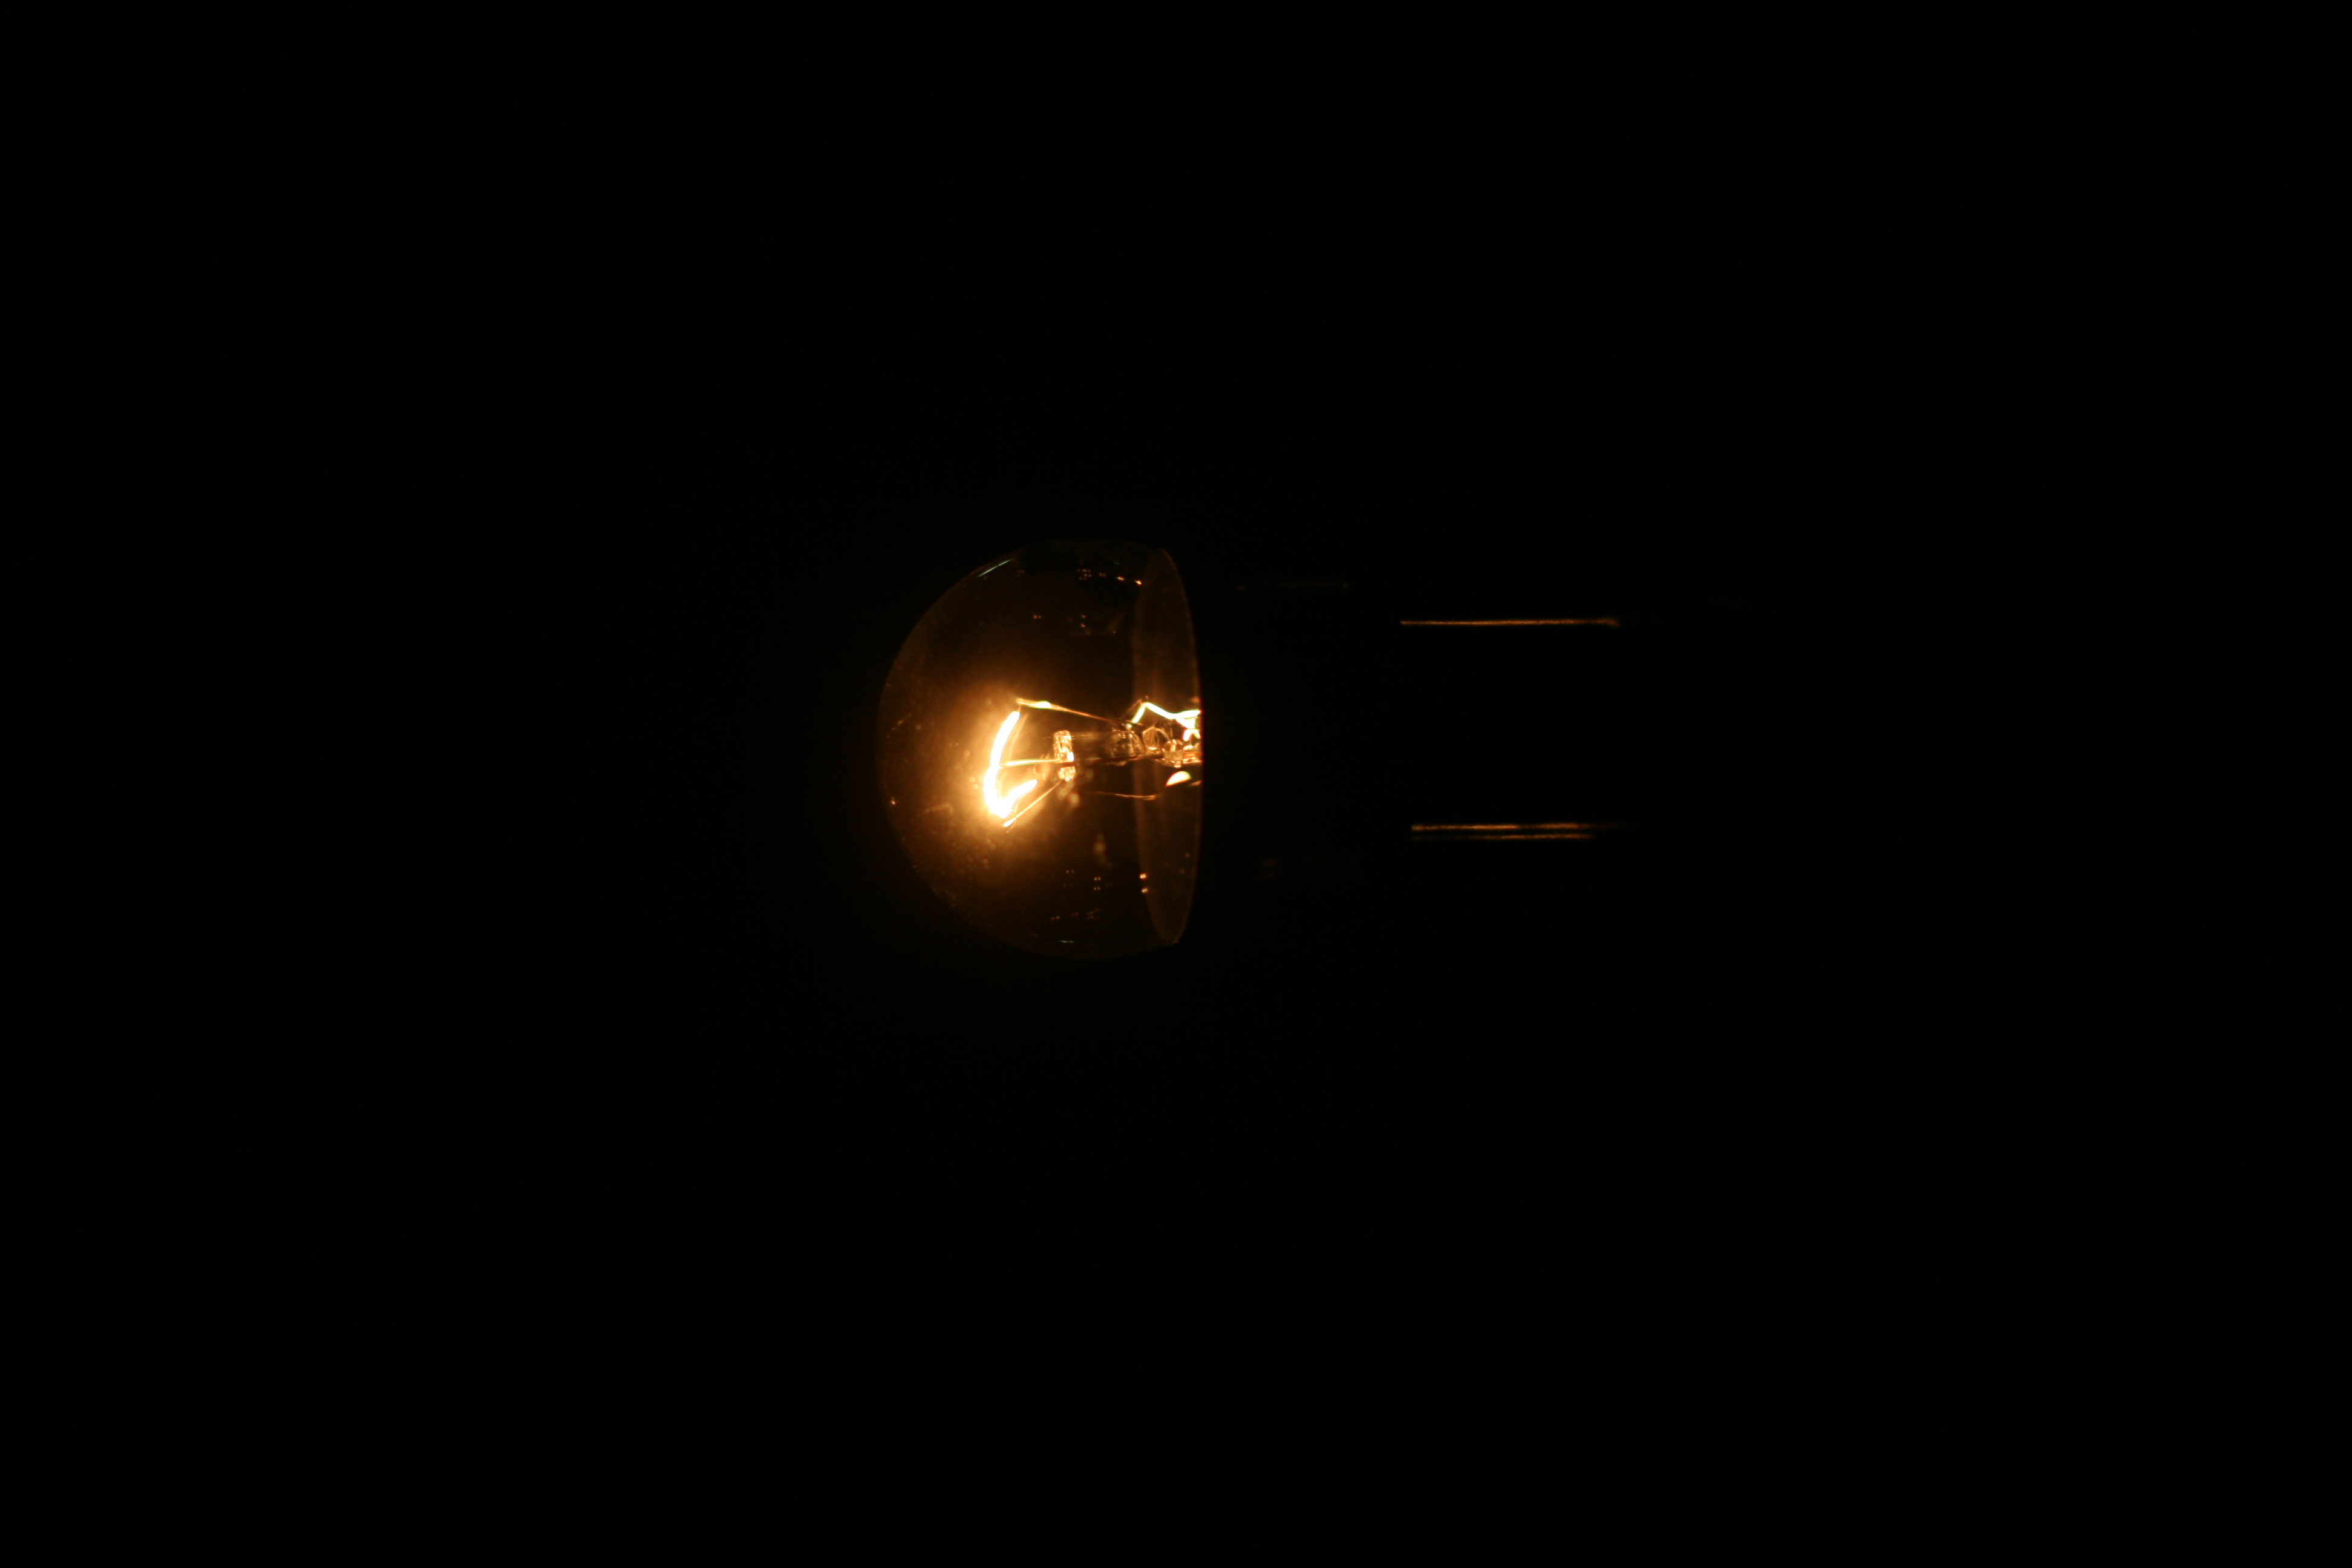 Dim light bulb at night | photo page - everystockphoto